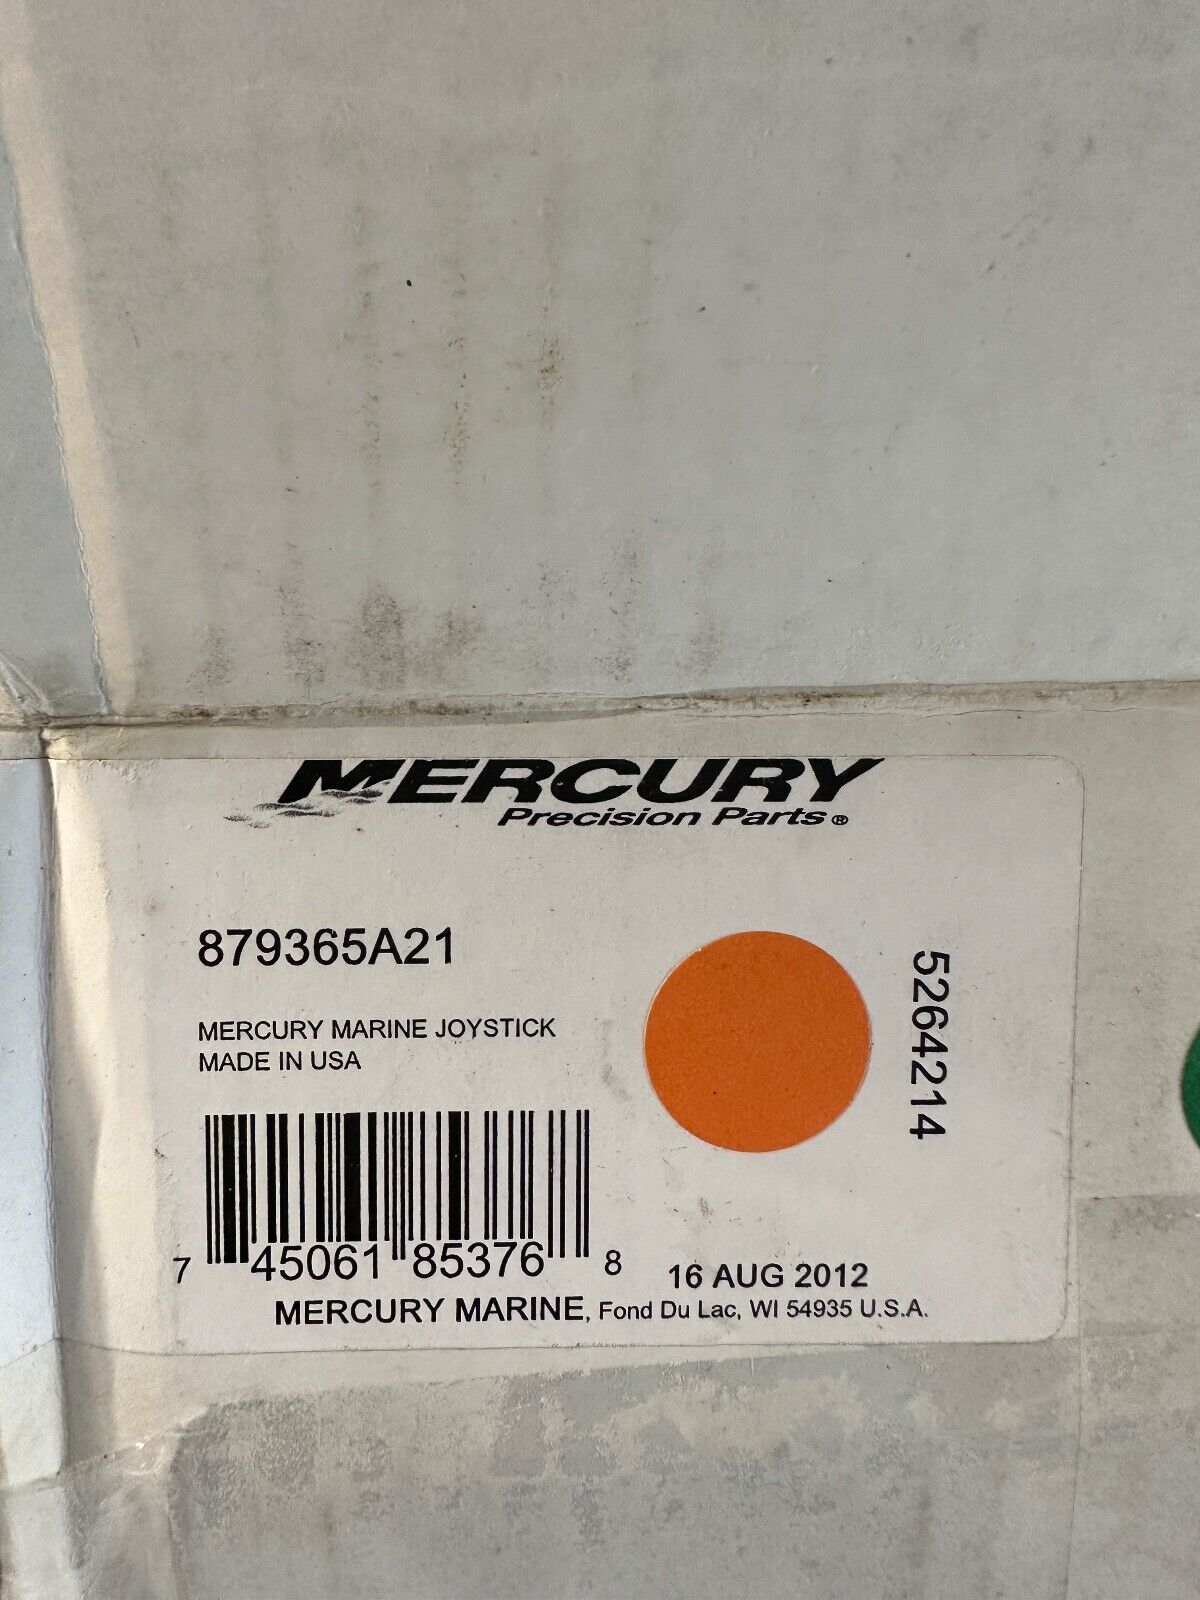 Mercury-Mercruiser Verado 879365A21 JOYSTICK ASSEMBLY JPO Retail : $2800+ - Fishhawk MarineeBay Motors:Parts & Accessories:Boat Parts:Controls & Steering